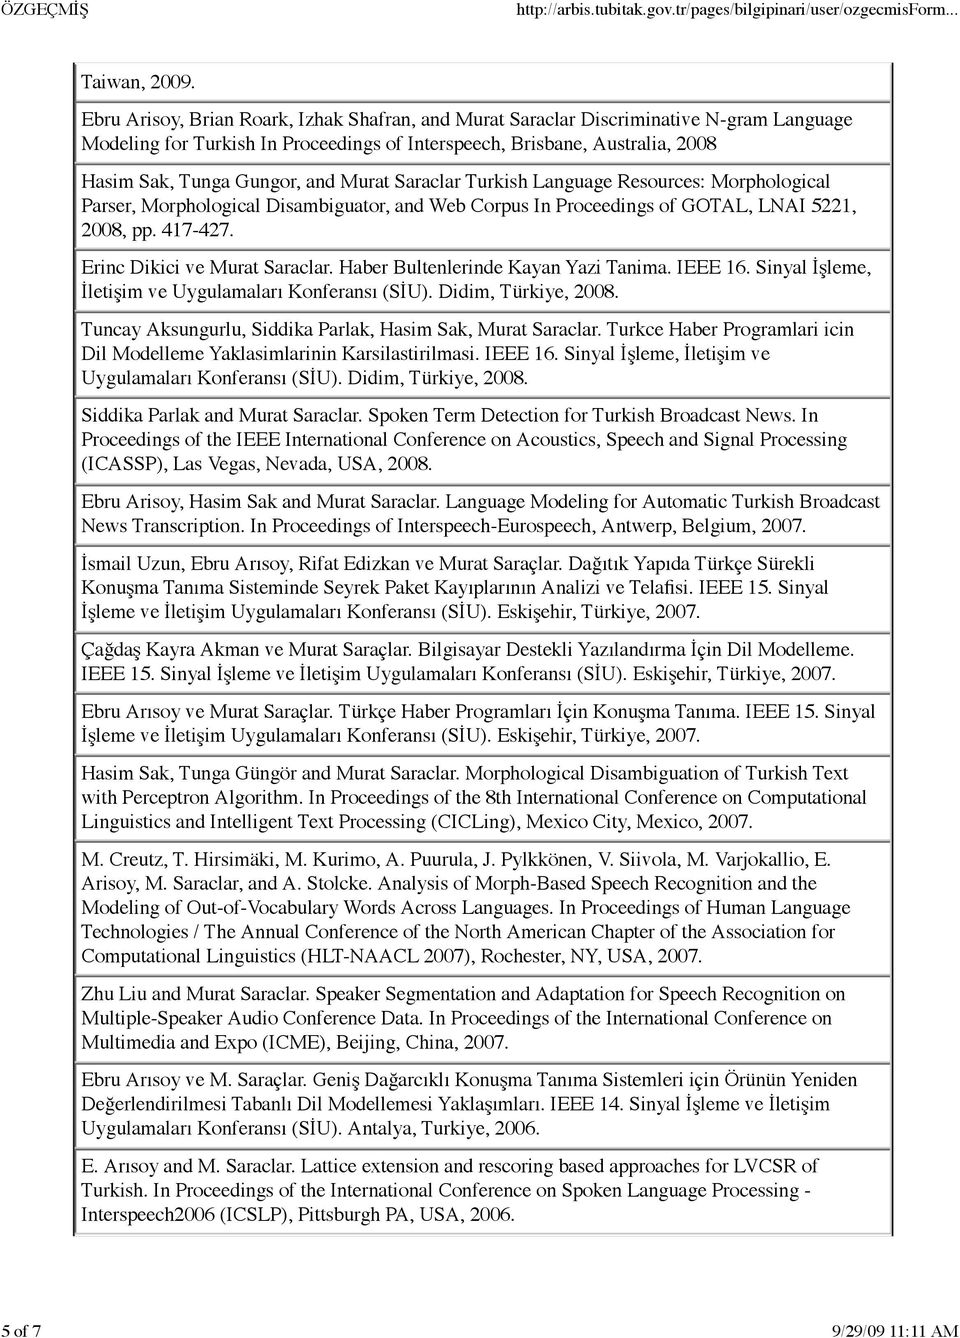 Murat Saraclar Turkish Language Resources: Morphological Parser, Morphological Disambiguator, and Web Corpus In Proceedings of GOTAL, LNAI 5221, 2008, pp. 417-427. Erinc Dikici ve Murat Saraclar.